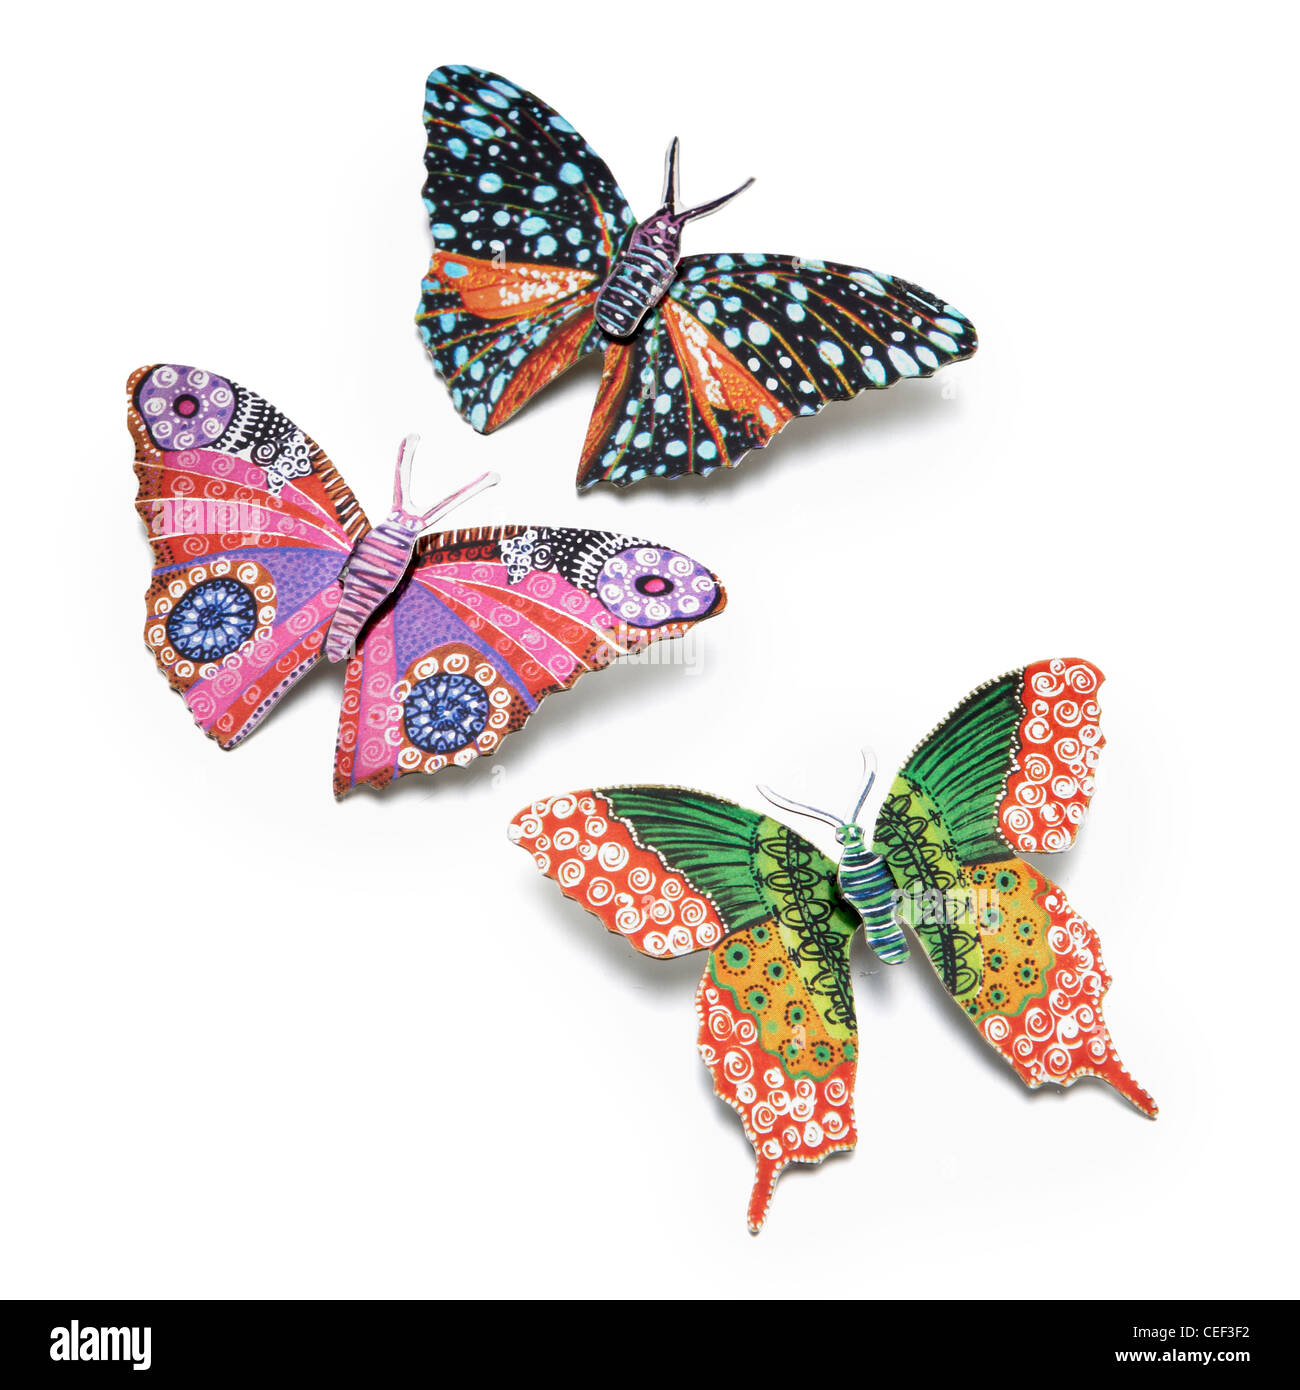 3 butterfly broaches enamel Stock Photo